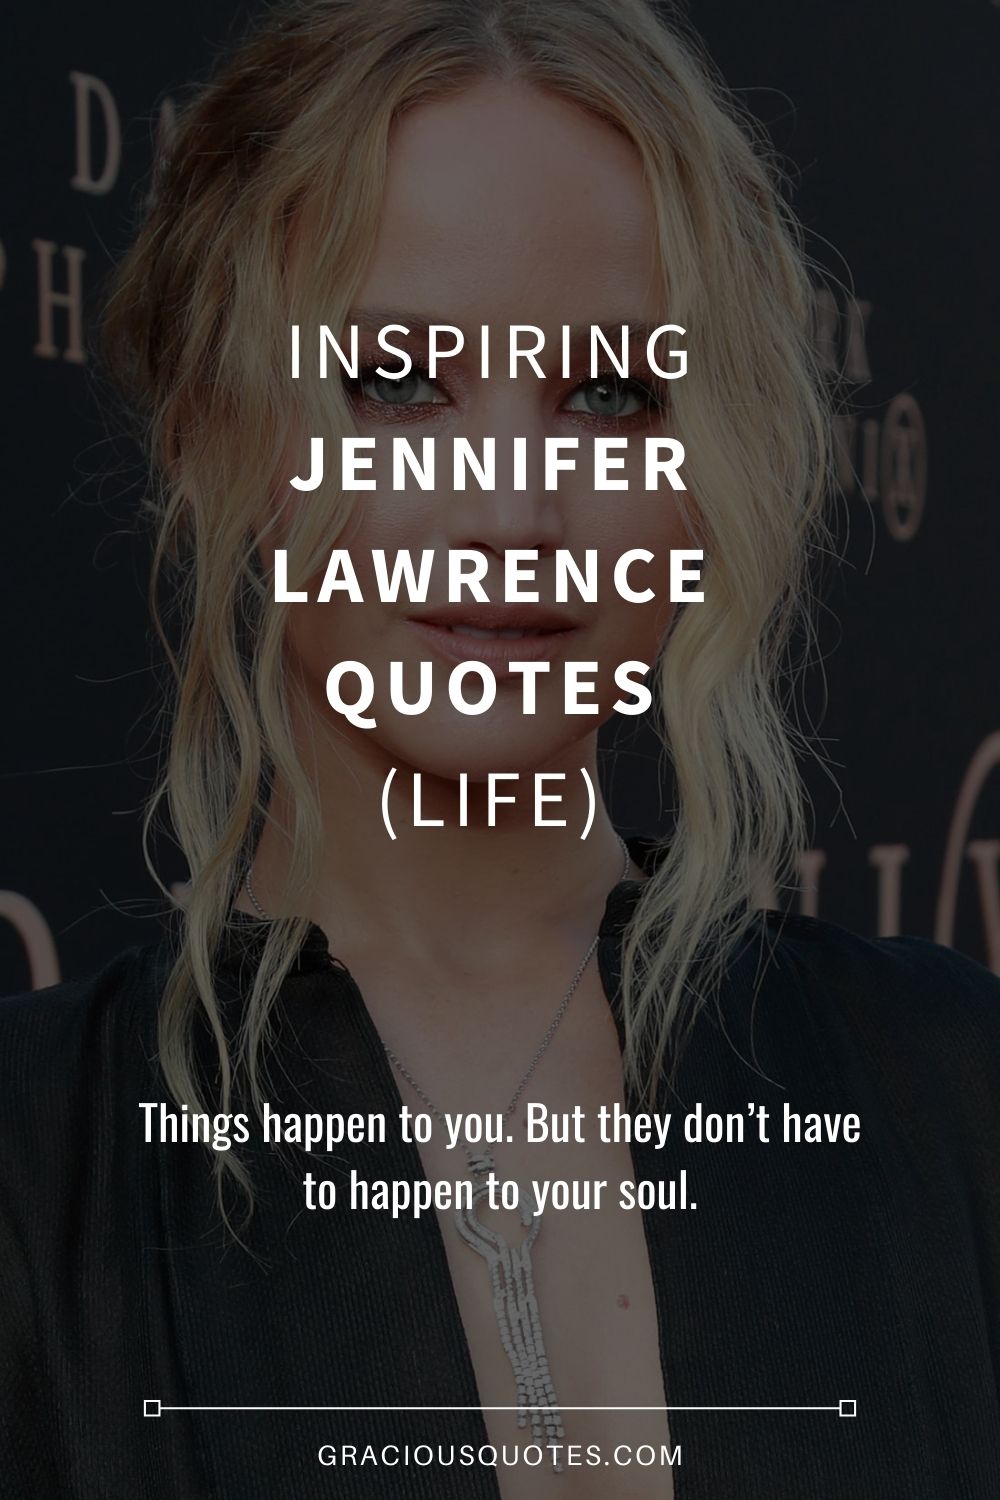 Inspiring Jennifer Lawrence Quotes (LIFE) - Gracious Quotes